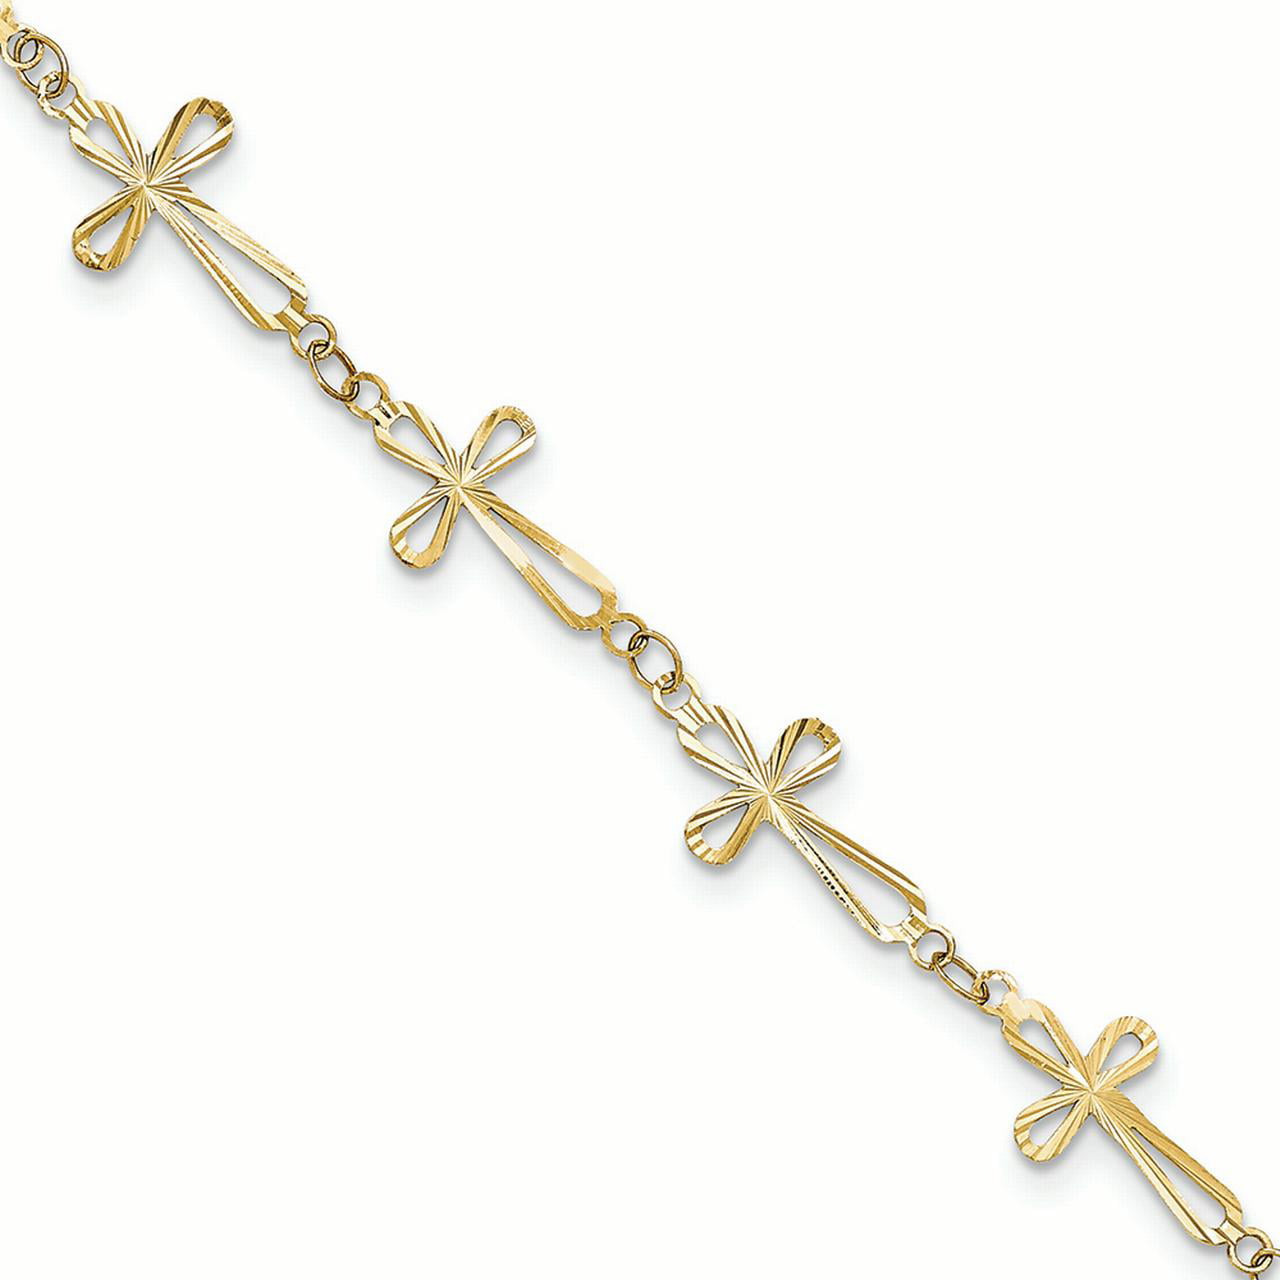 14K Yellow Gold Sideways Cross Bracelet Adjustable Chain 7-7.5"